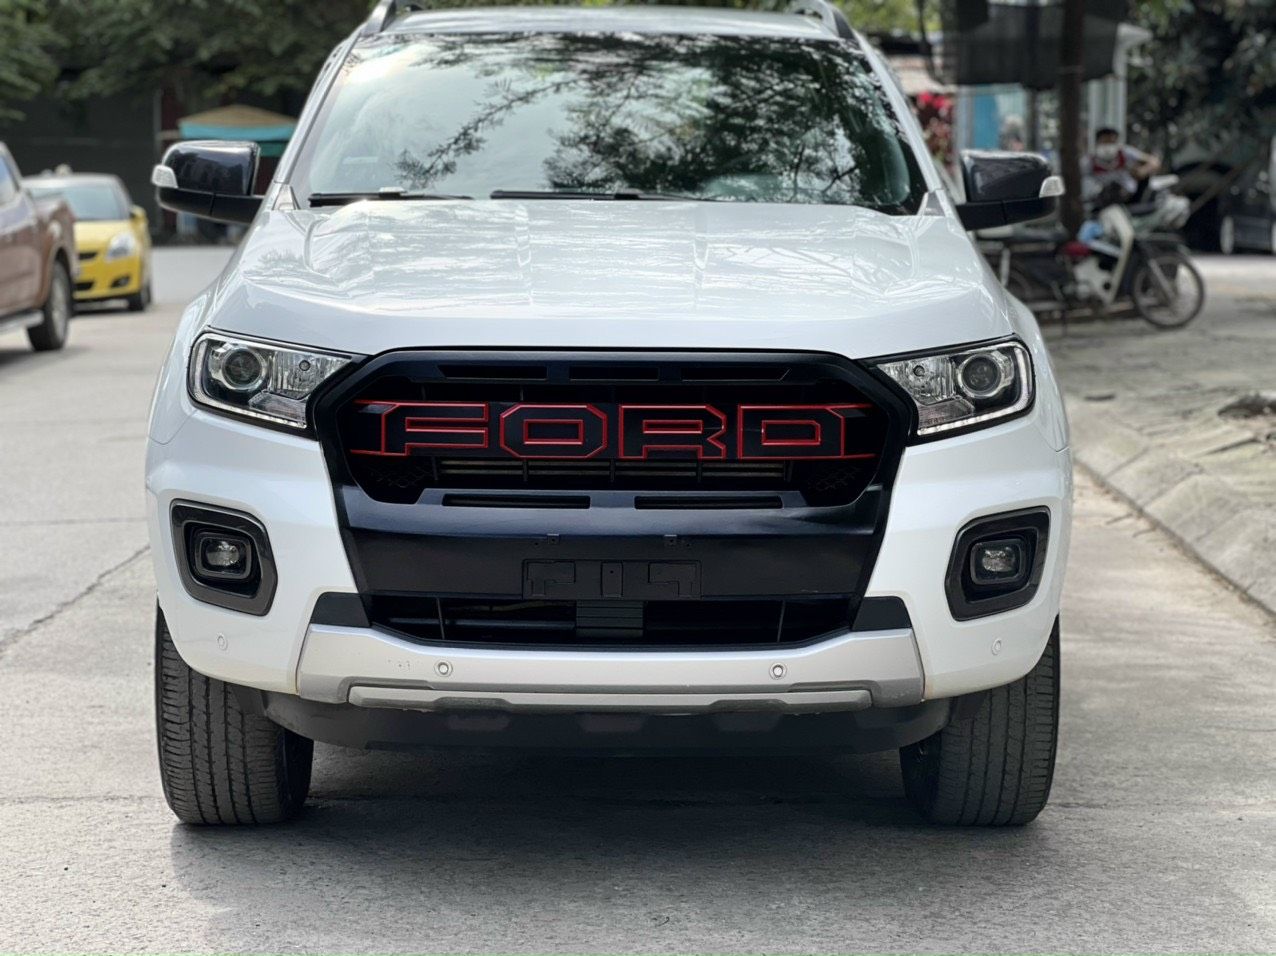 Ford Ranger 2018 - Giá 760 triệu